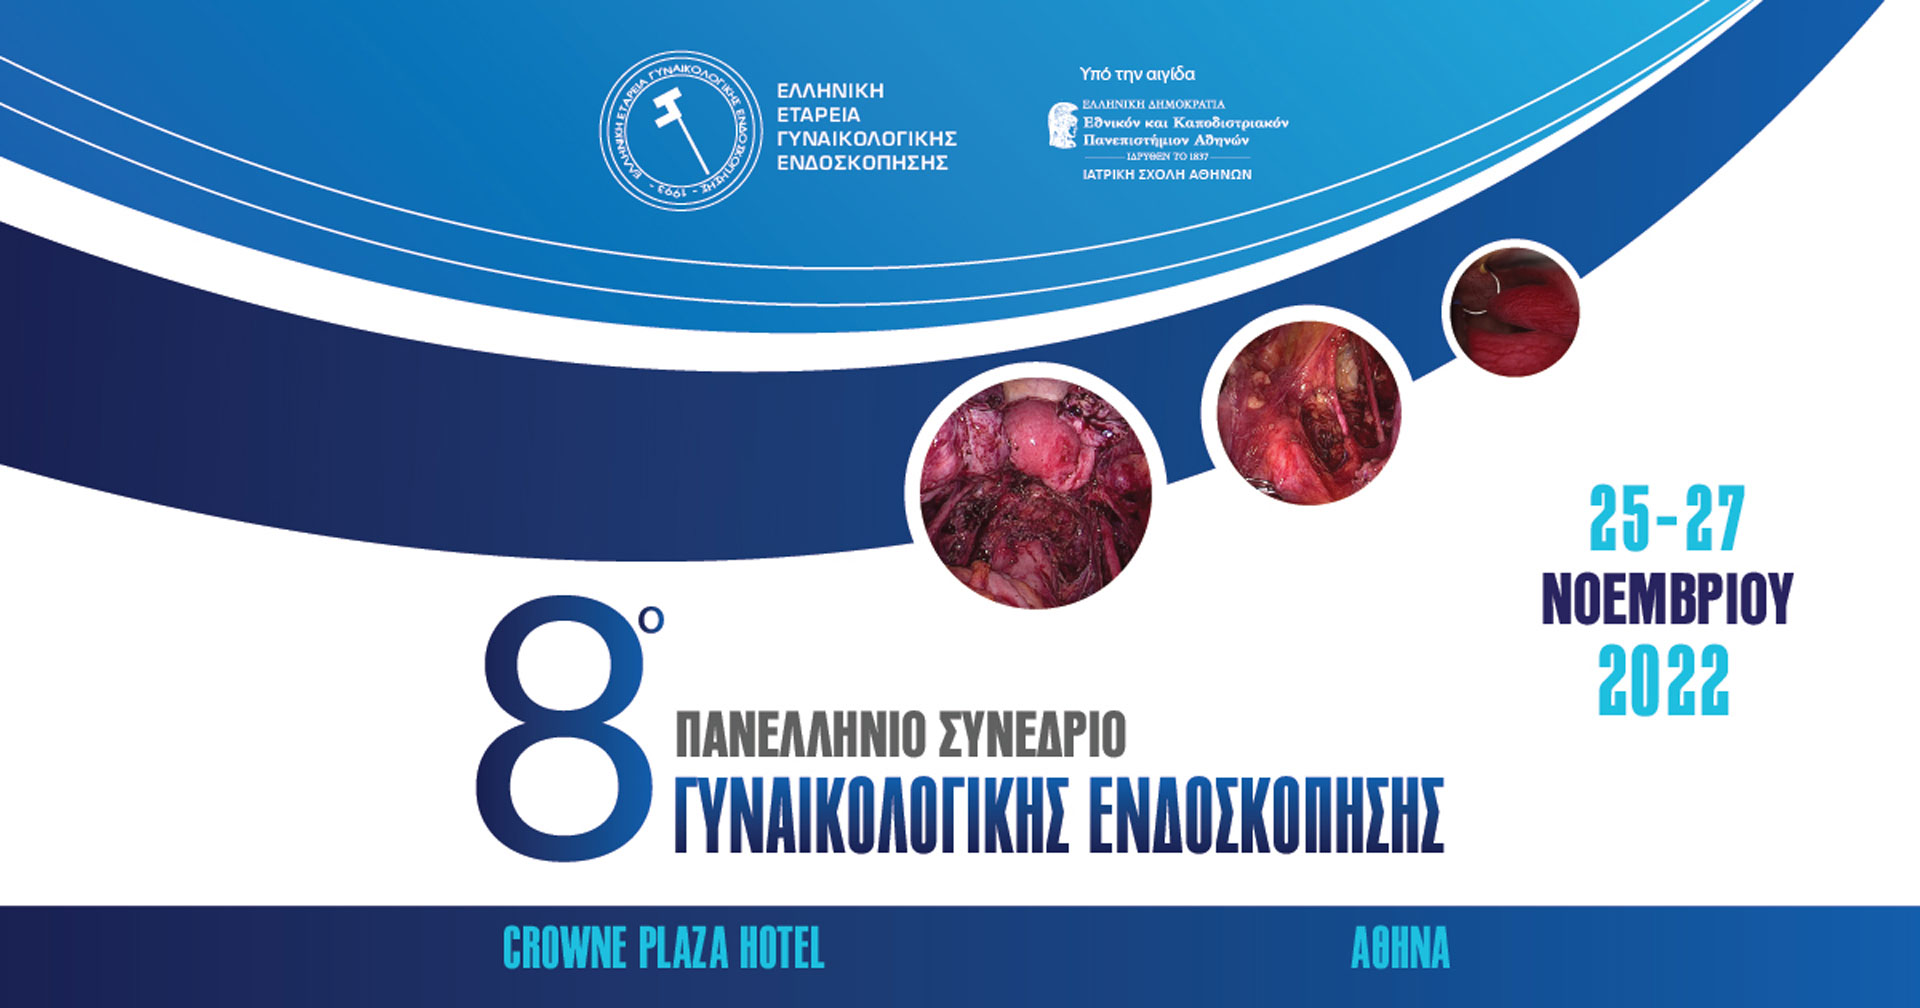 8th Panhellenic Congress of Gynecological Endoscopy, Athens 25-27 November 2022